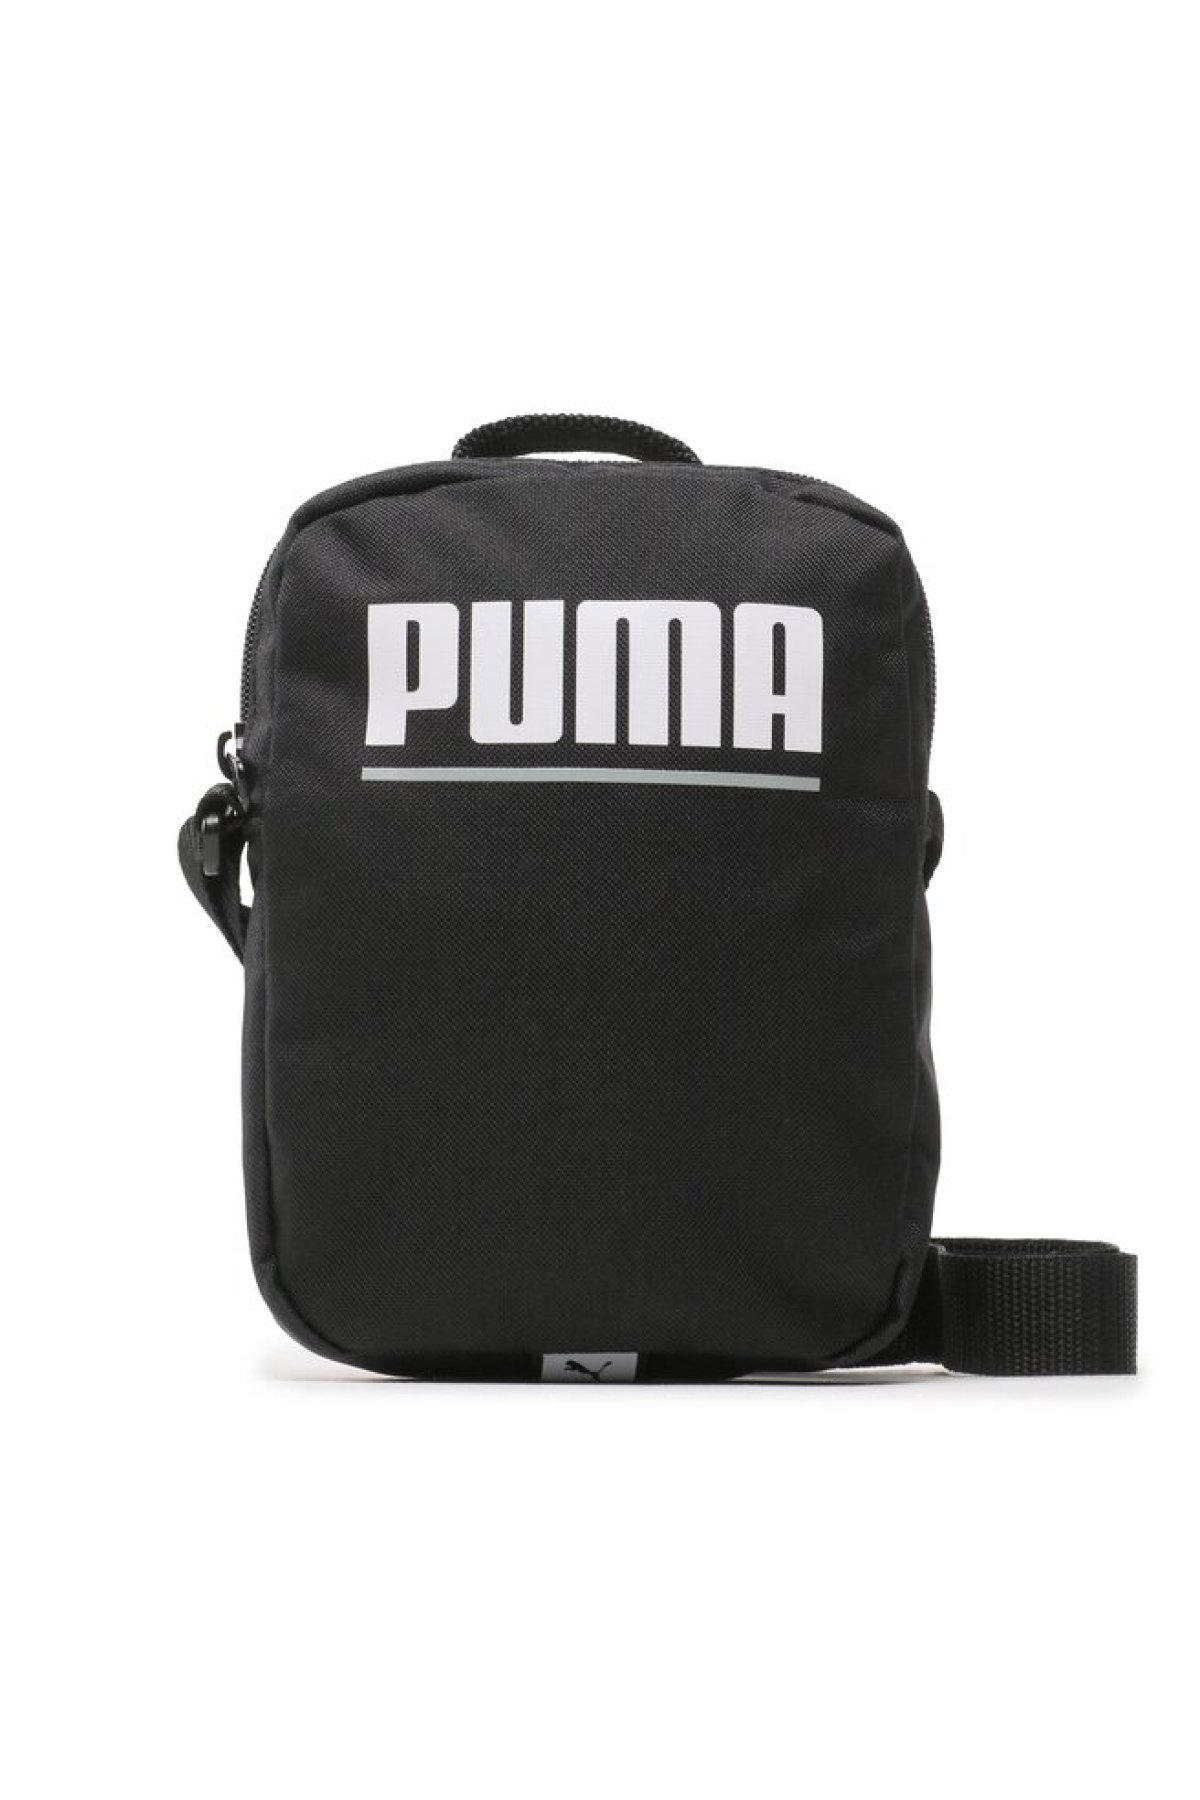 Puma 079613-01